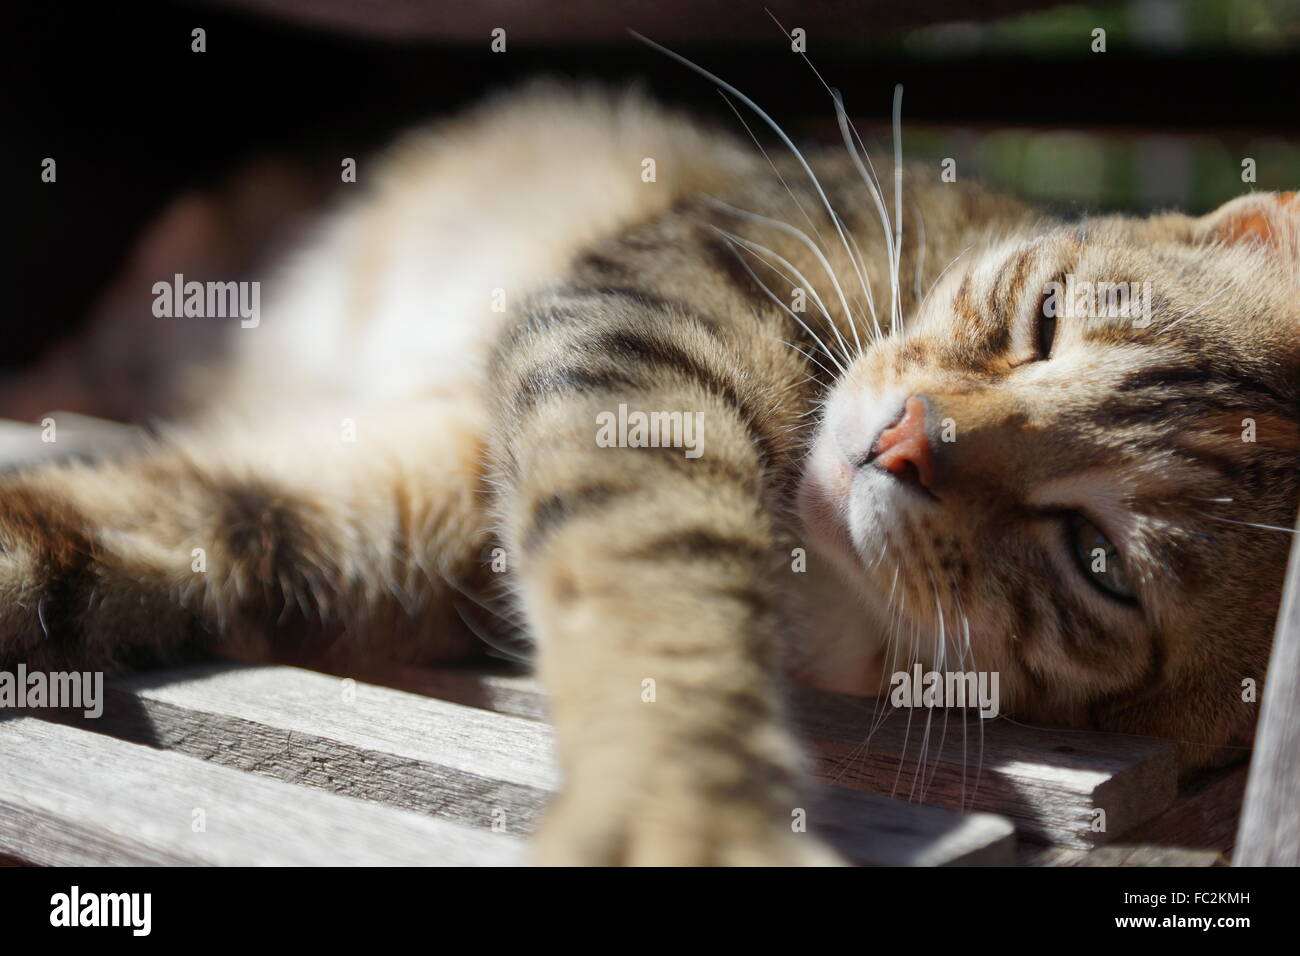 cat sleeping in sun Stock Photo